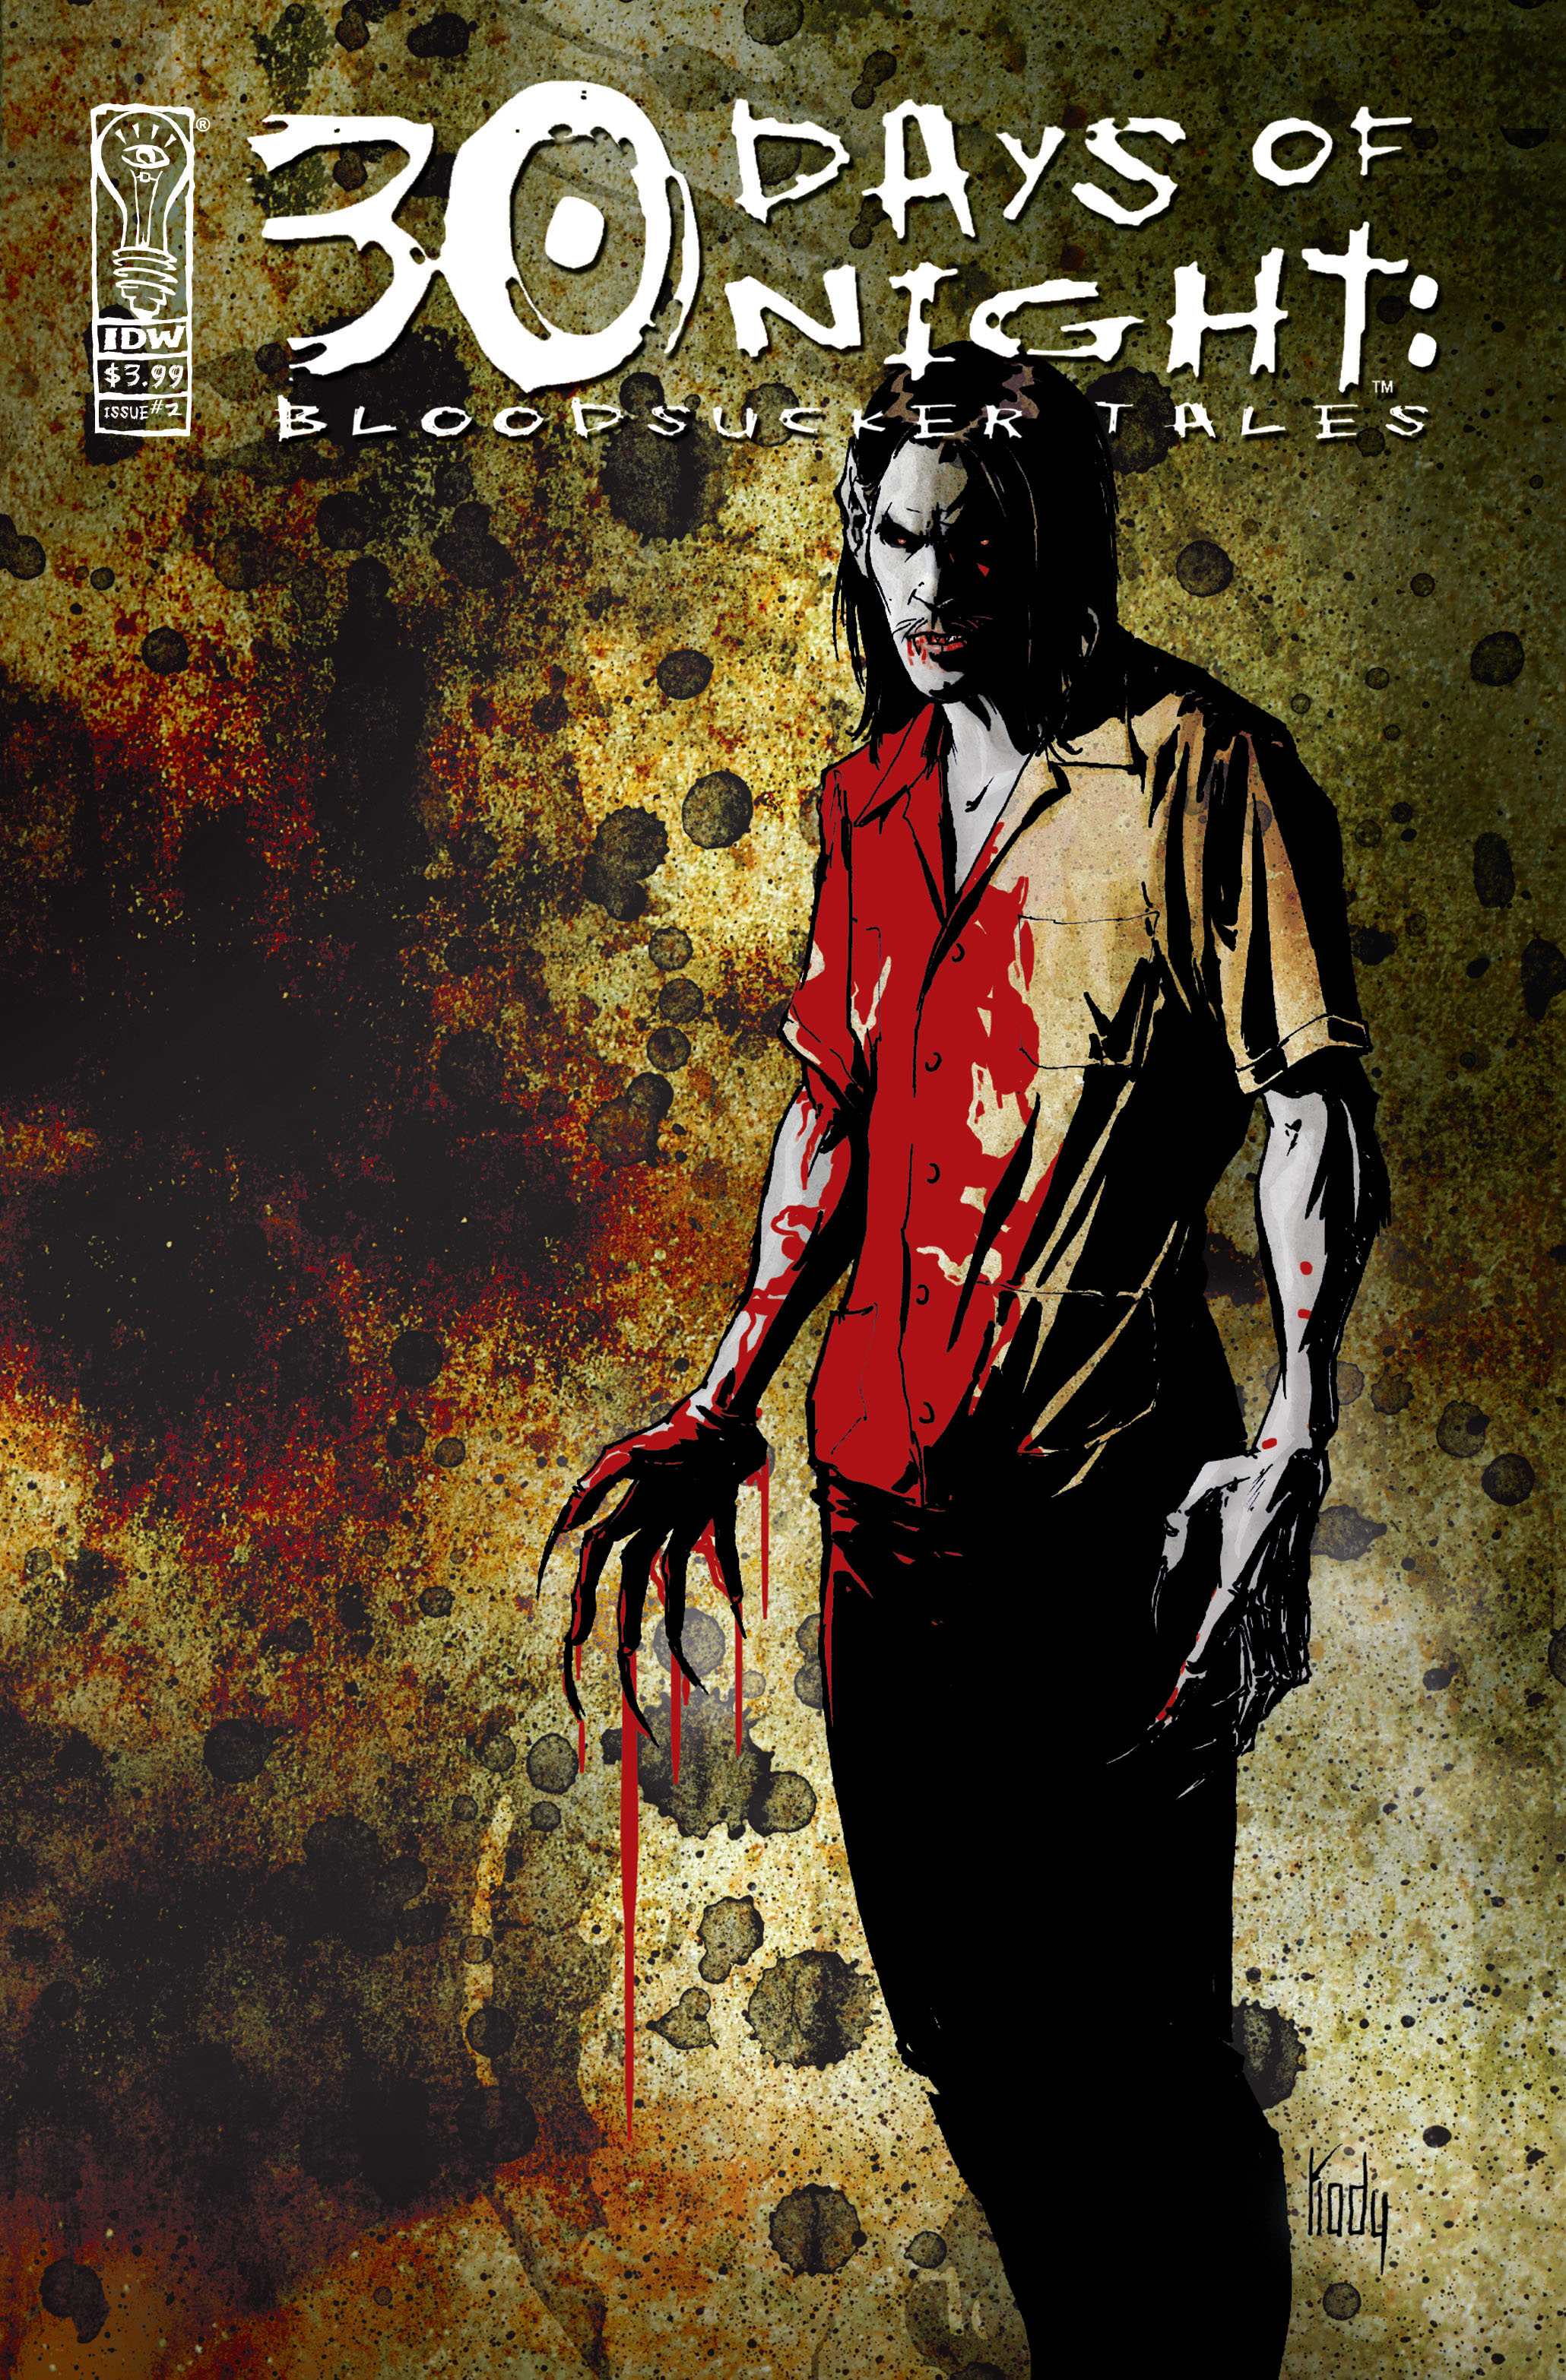 Read online 30 Days of Night: Bloodsucker Tales comic -  Issue #2 - 1